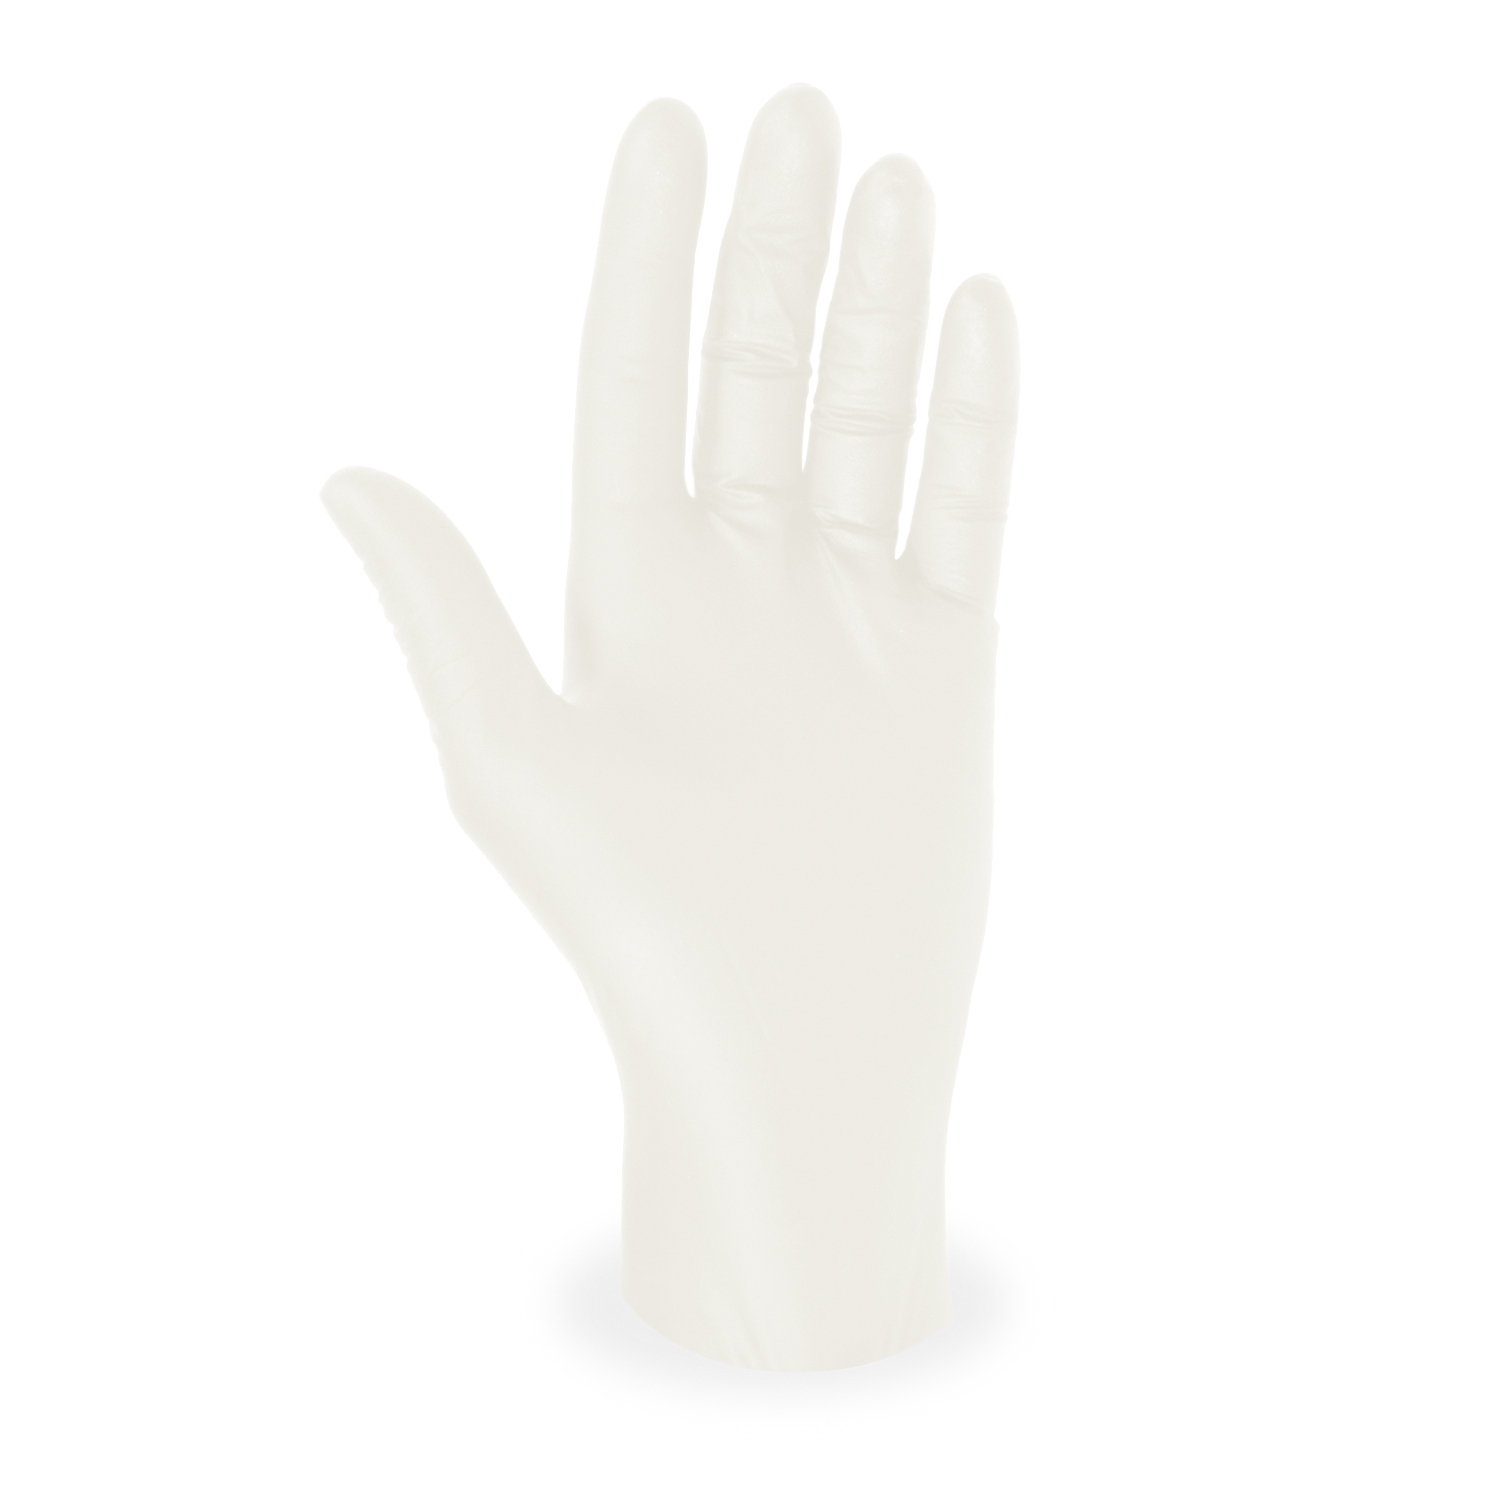 Handschuh (Latex) ungepudert weiß XL - 100 Stück